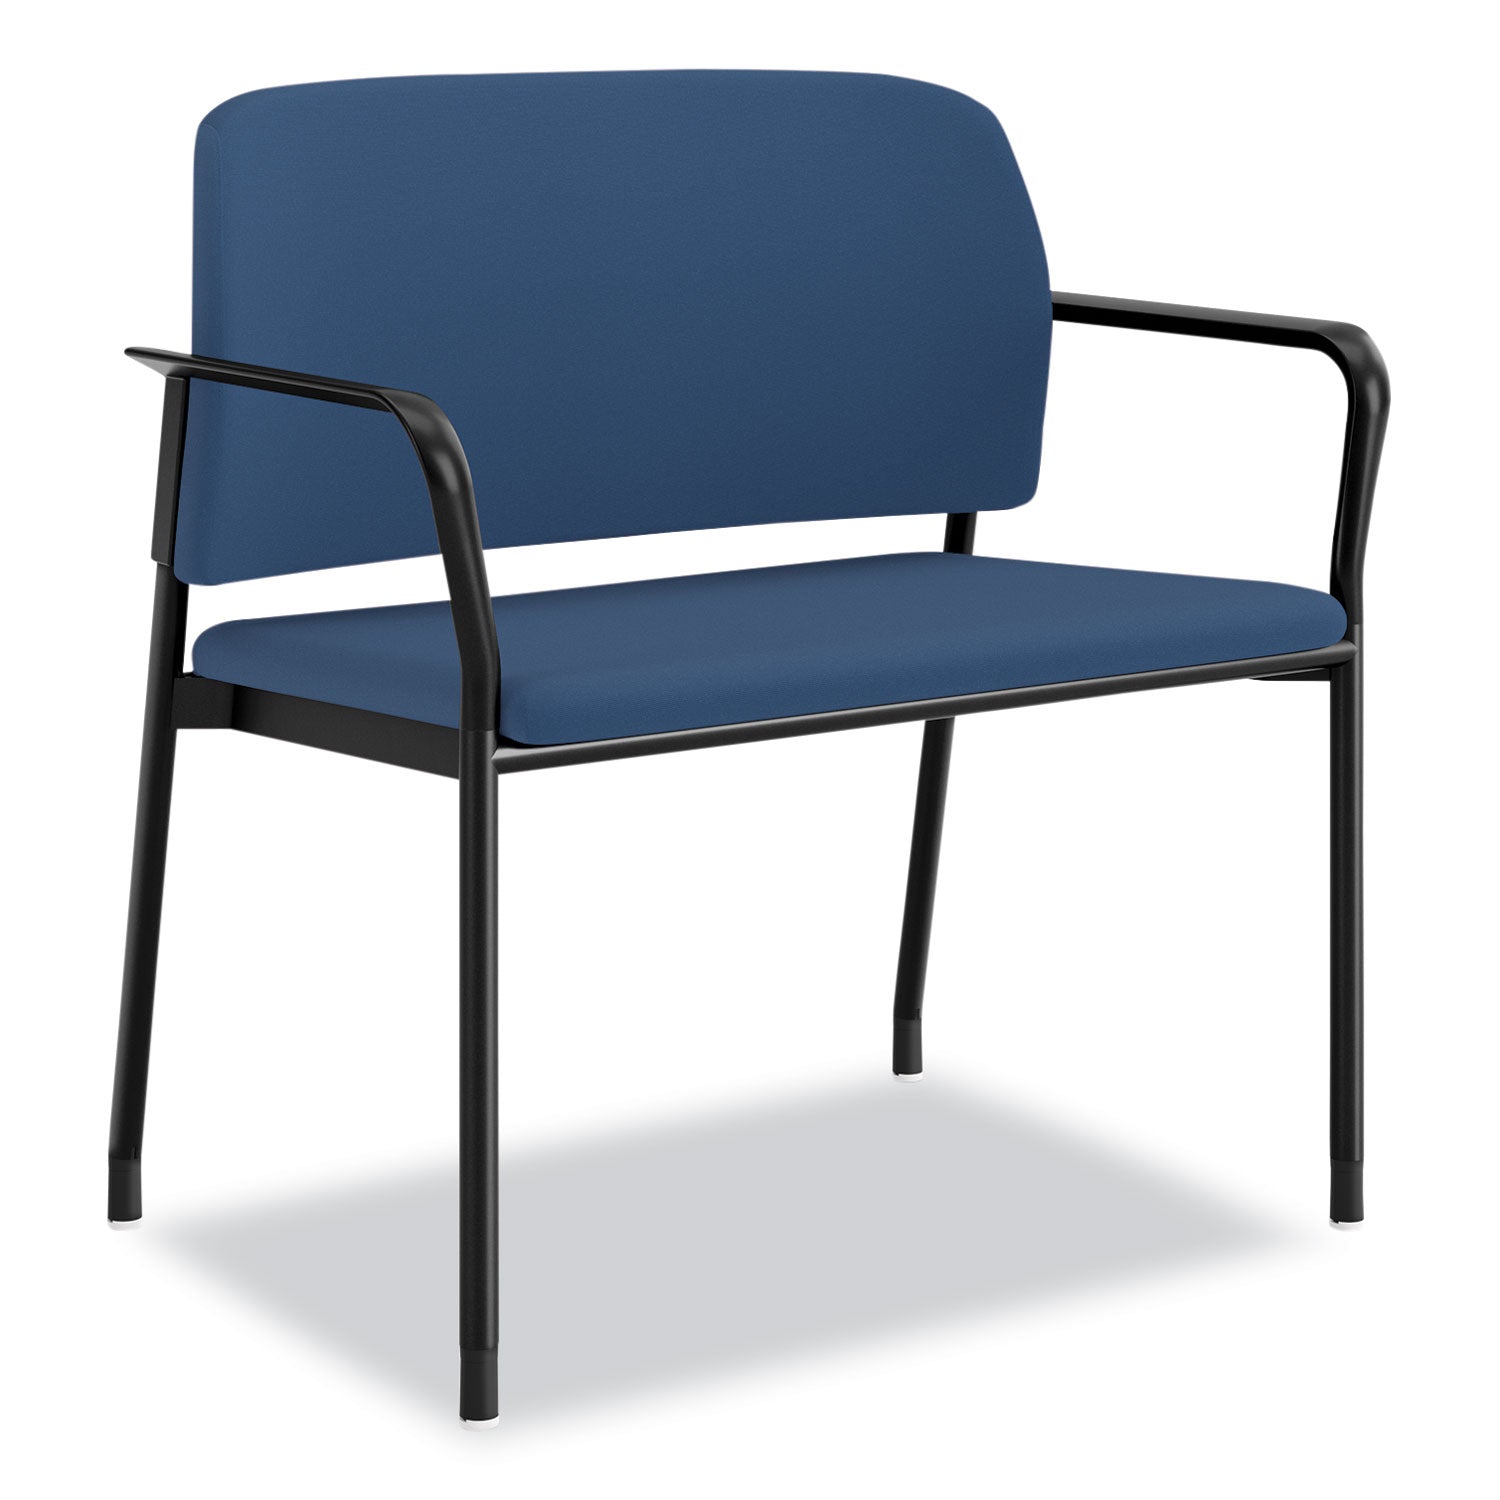 accommodate-series-bariatric-chair-with-arms-335-x-215-x-325-elysian-seat-elysian-back-charblack-legs_honsb50fesx04cb - 1